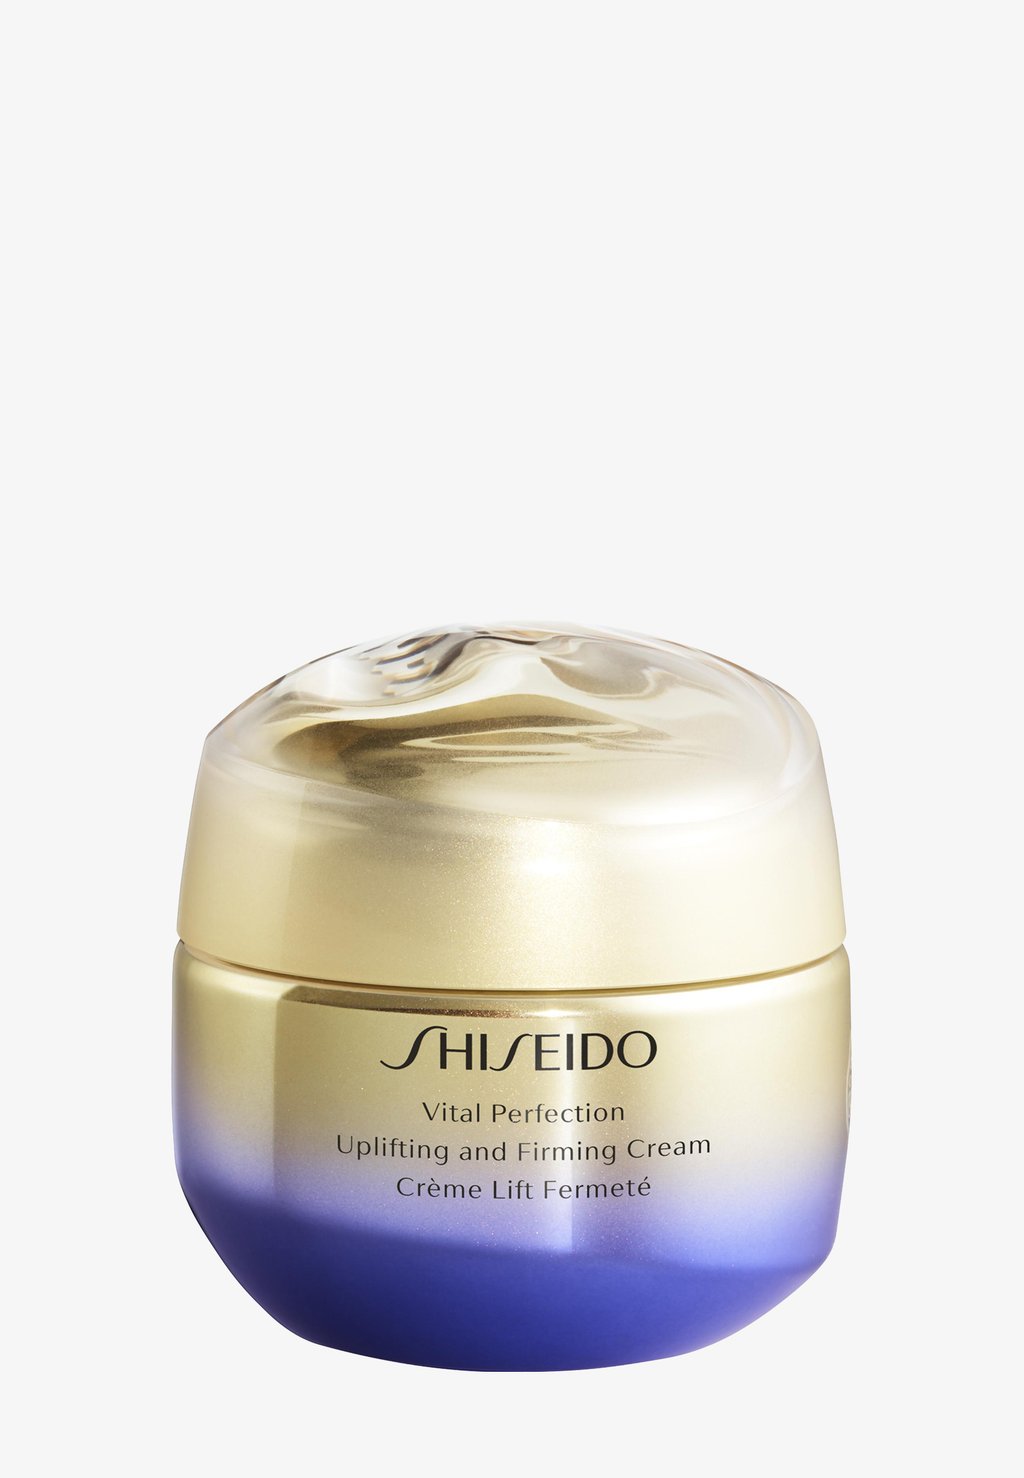 Дневной крем Vital Perfection Uplifting And Firming Cream 50Ml Shiseido фотографии